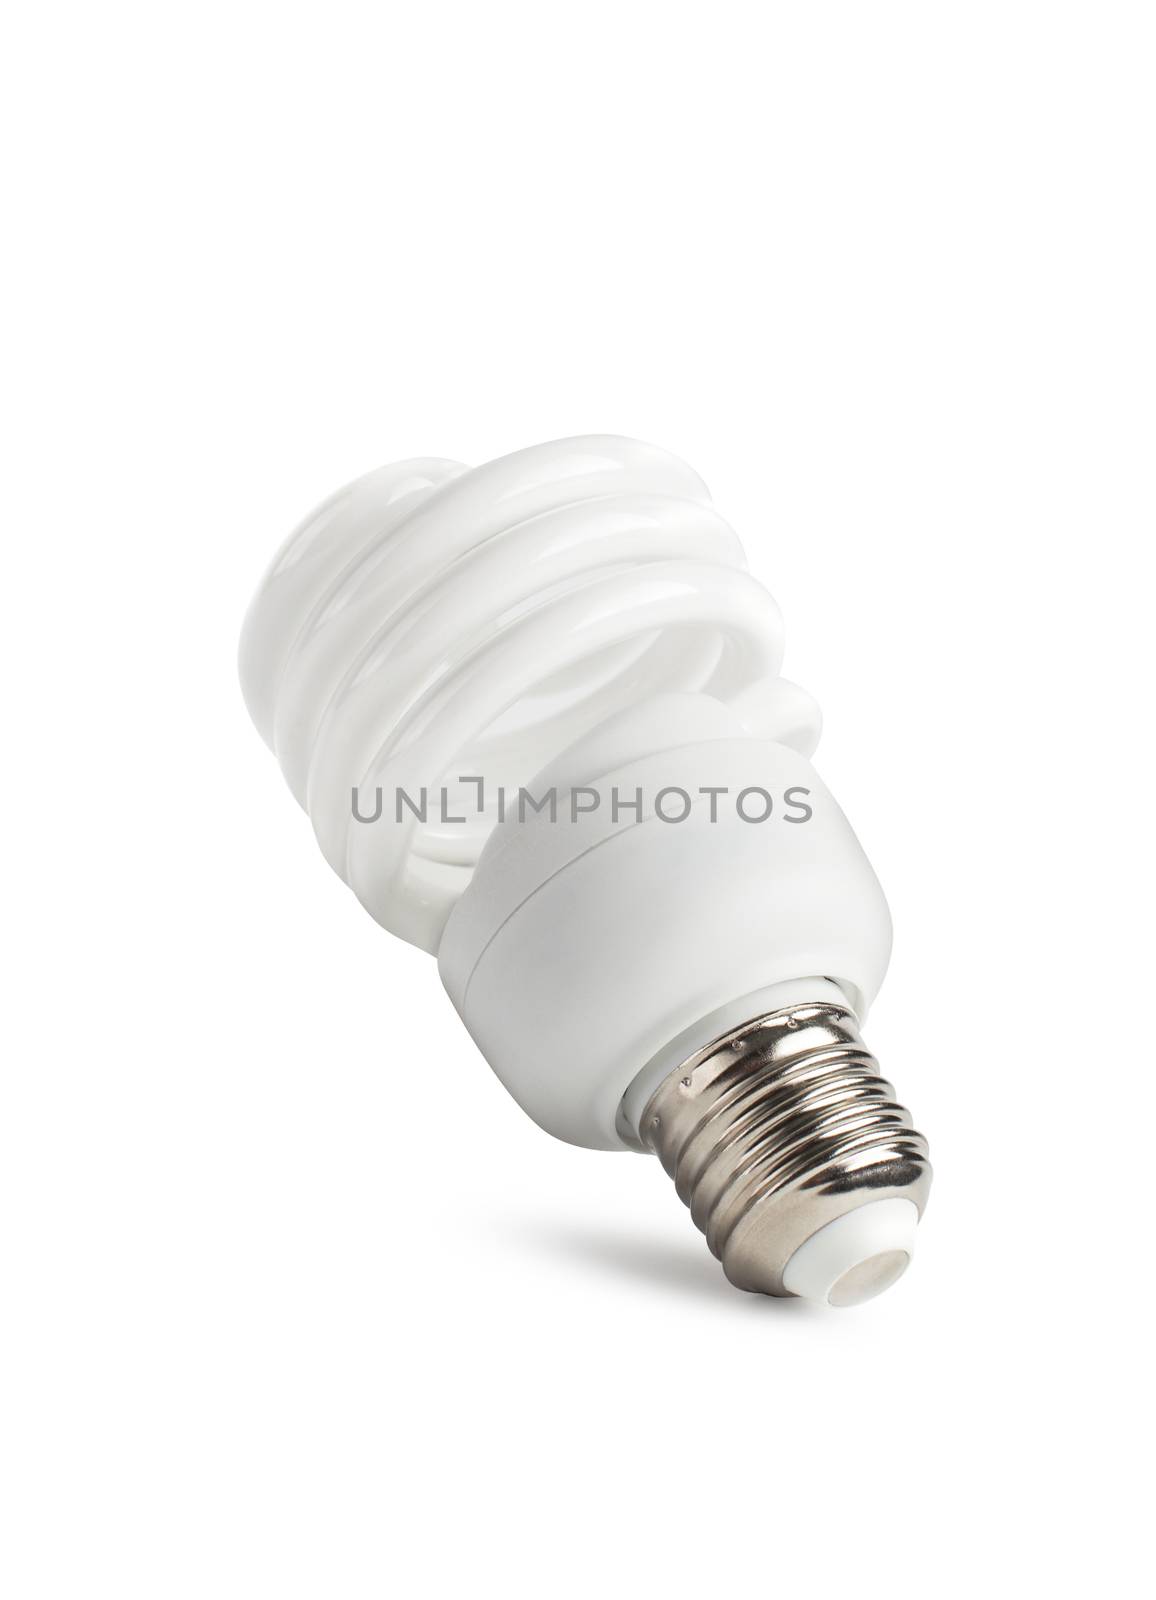 Energy saving light bulb by SlayCer